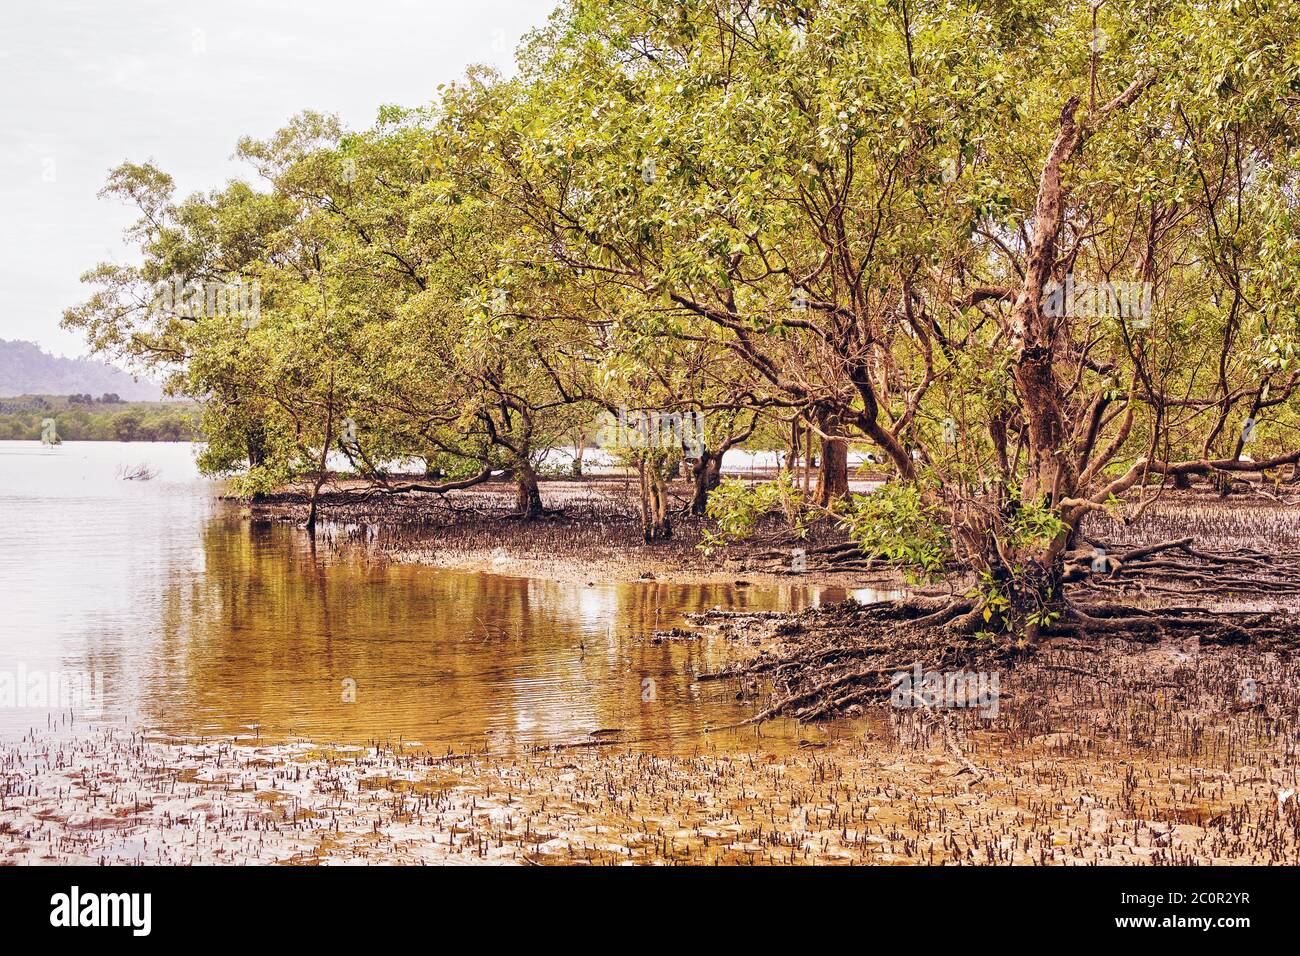 Palude di mangrovie thailandese Foto Stock